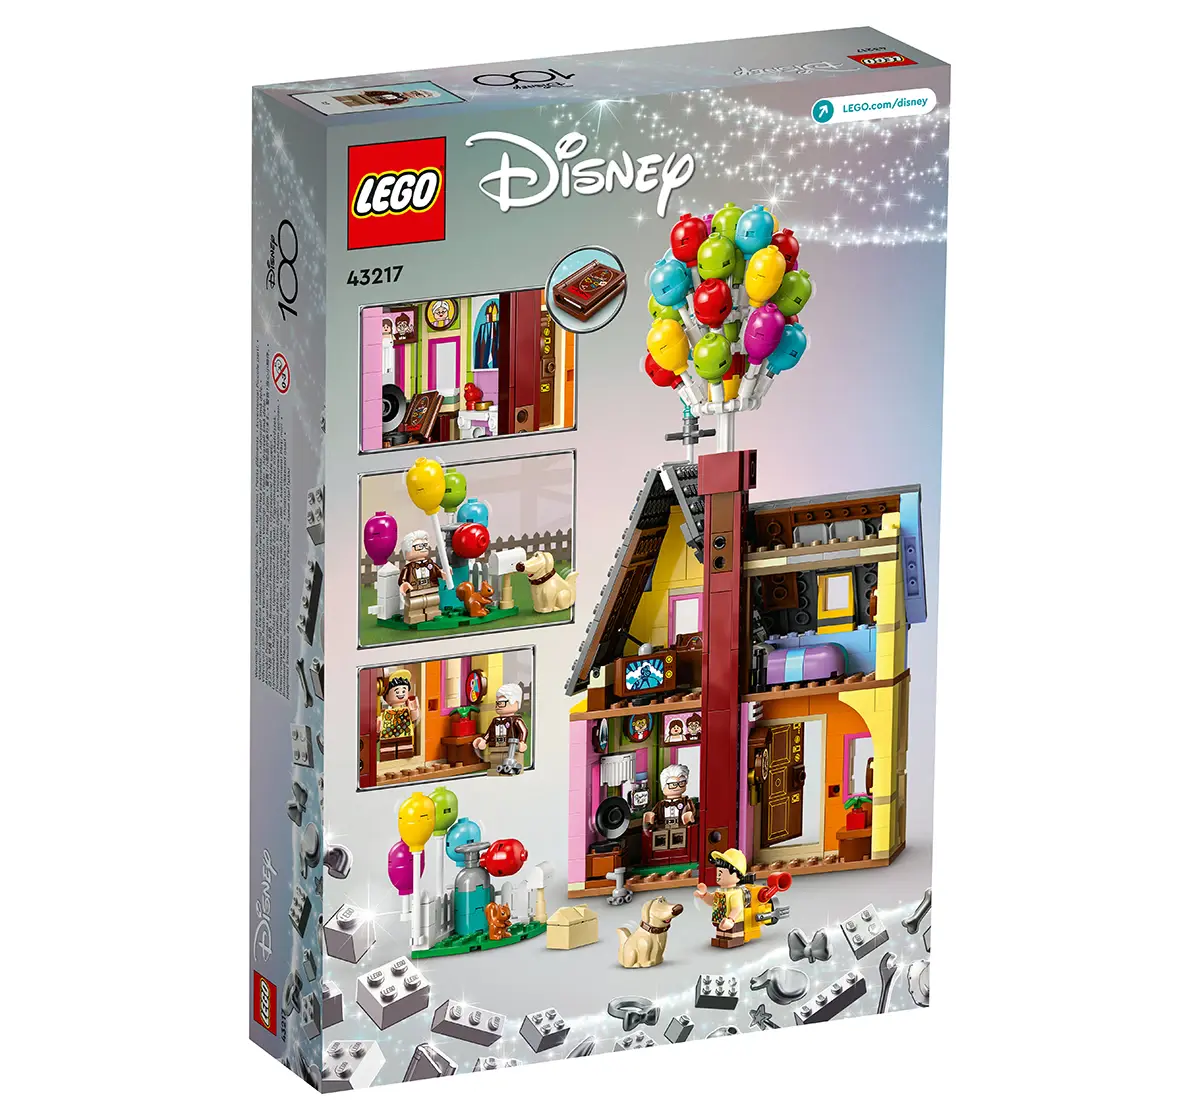 Lego Disney And Pixar Up House 43217 Building Toy Set (598 Pieces), 9Y+